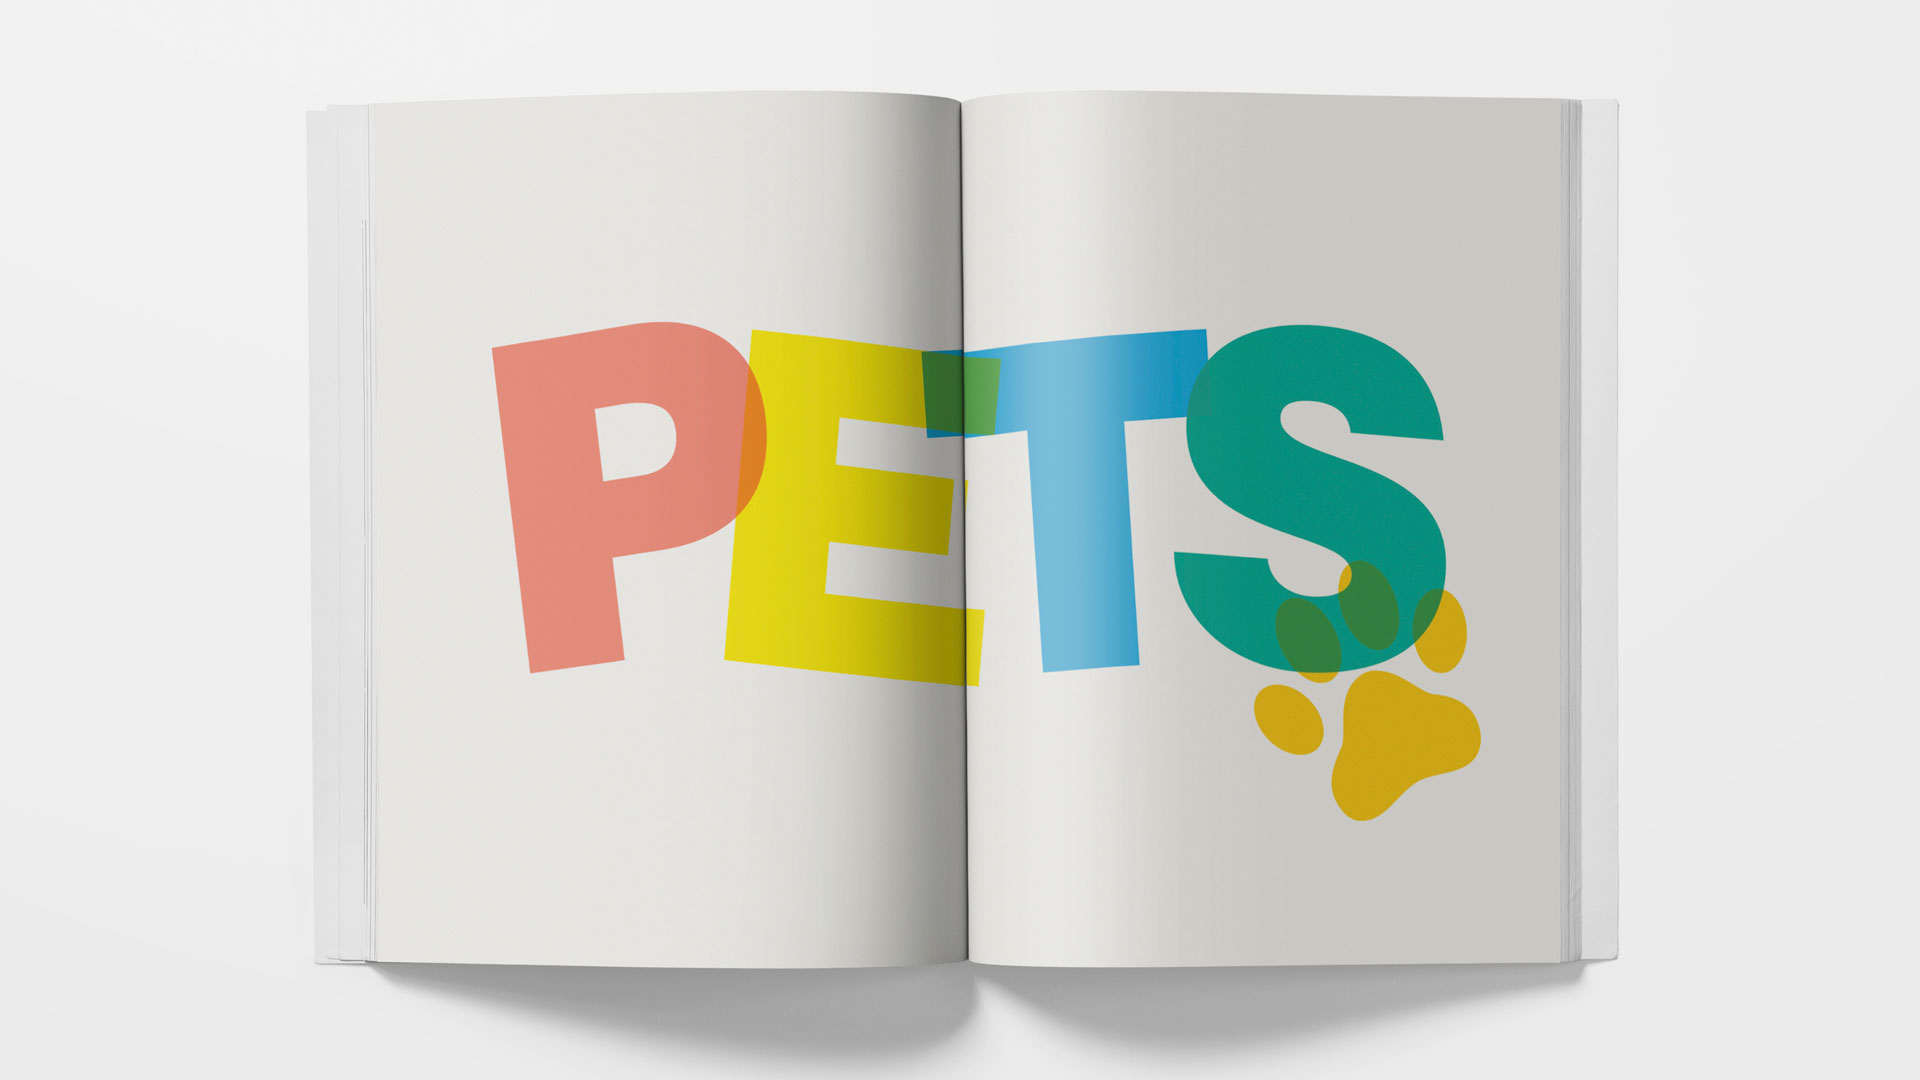 Pets magazine by Shuhan Lu